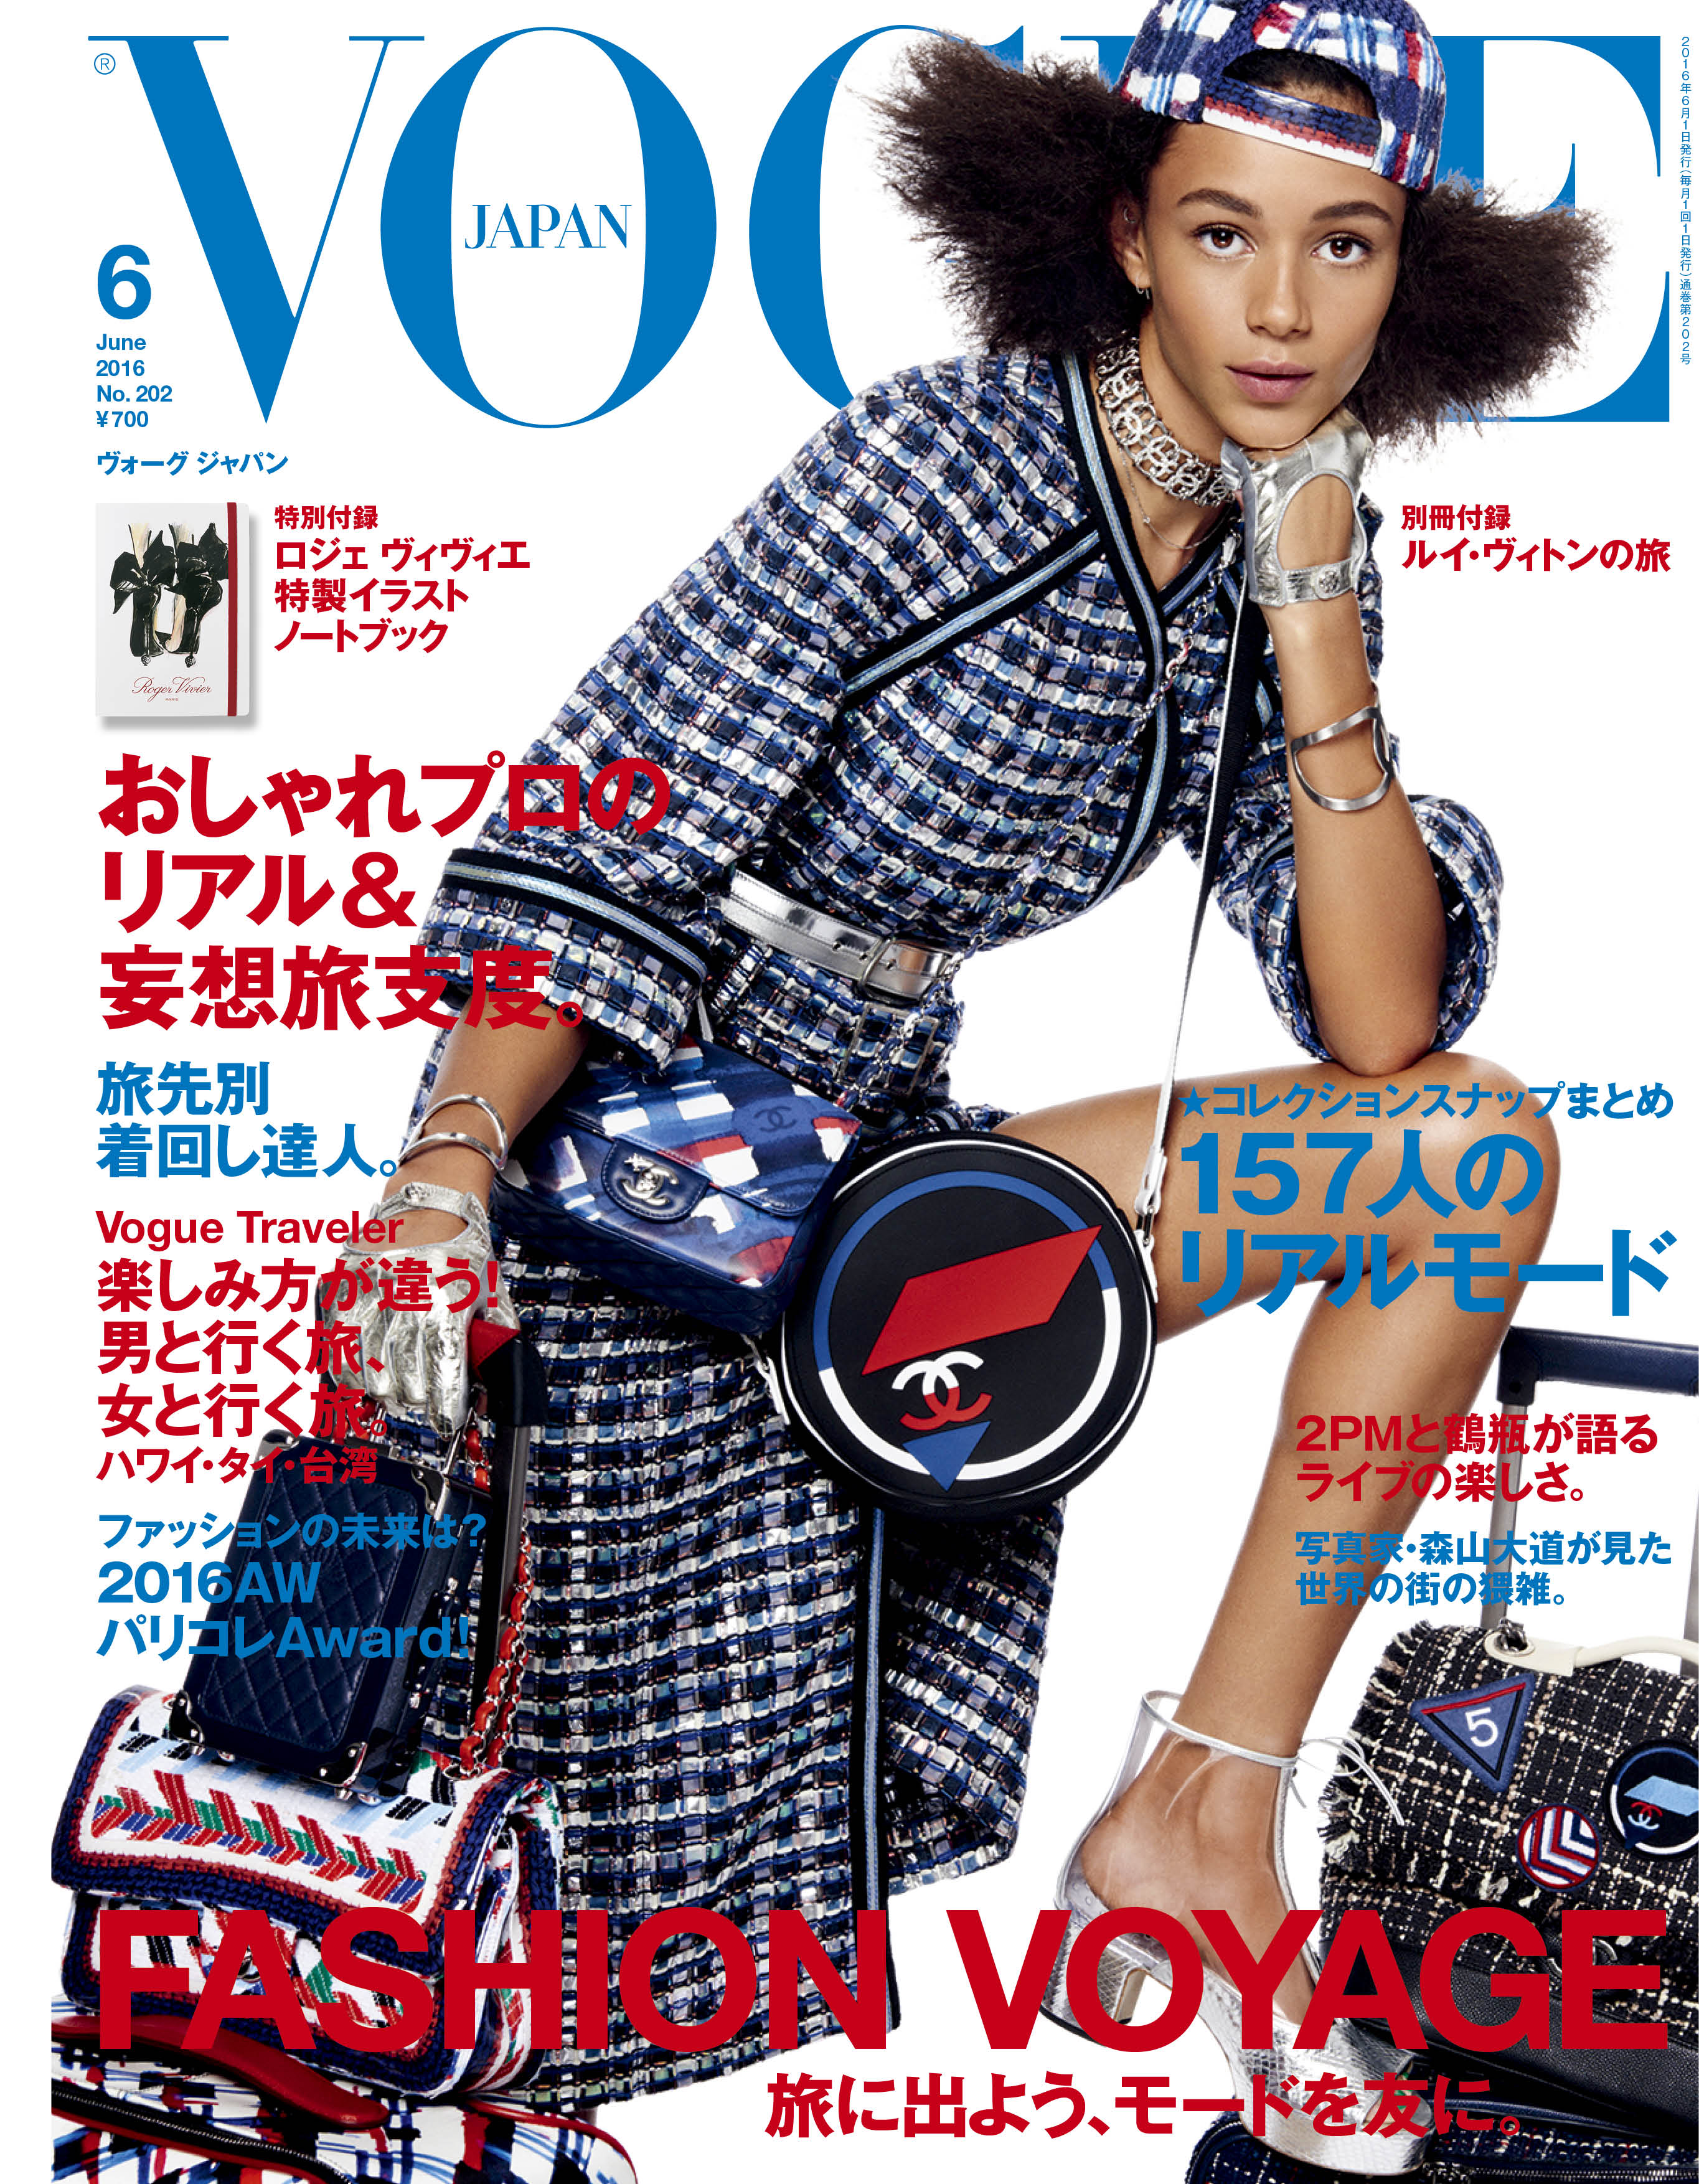 Vogue Japan 6月号 ファッショニスタと行くモードな旅 パリコレレポート 157人の4都市コレクションスナップ コンデナスト ジャパンのプレスリリース